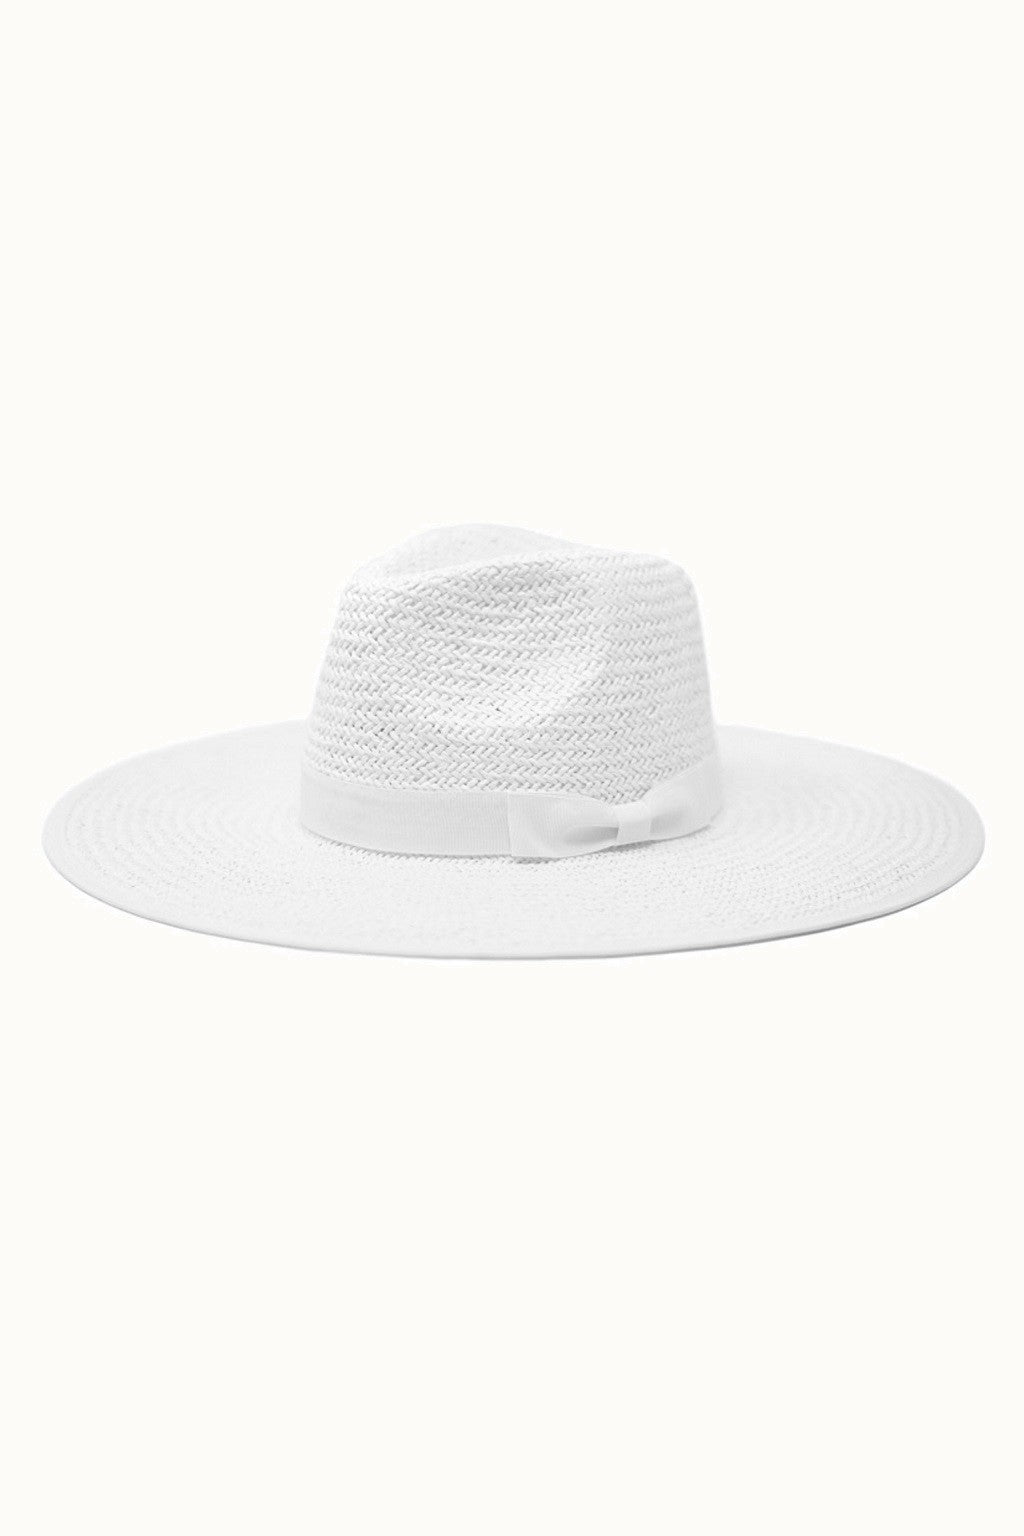 The Emilee Wide Brim Rancher Hat